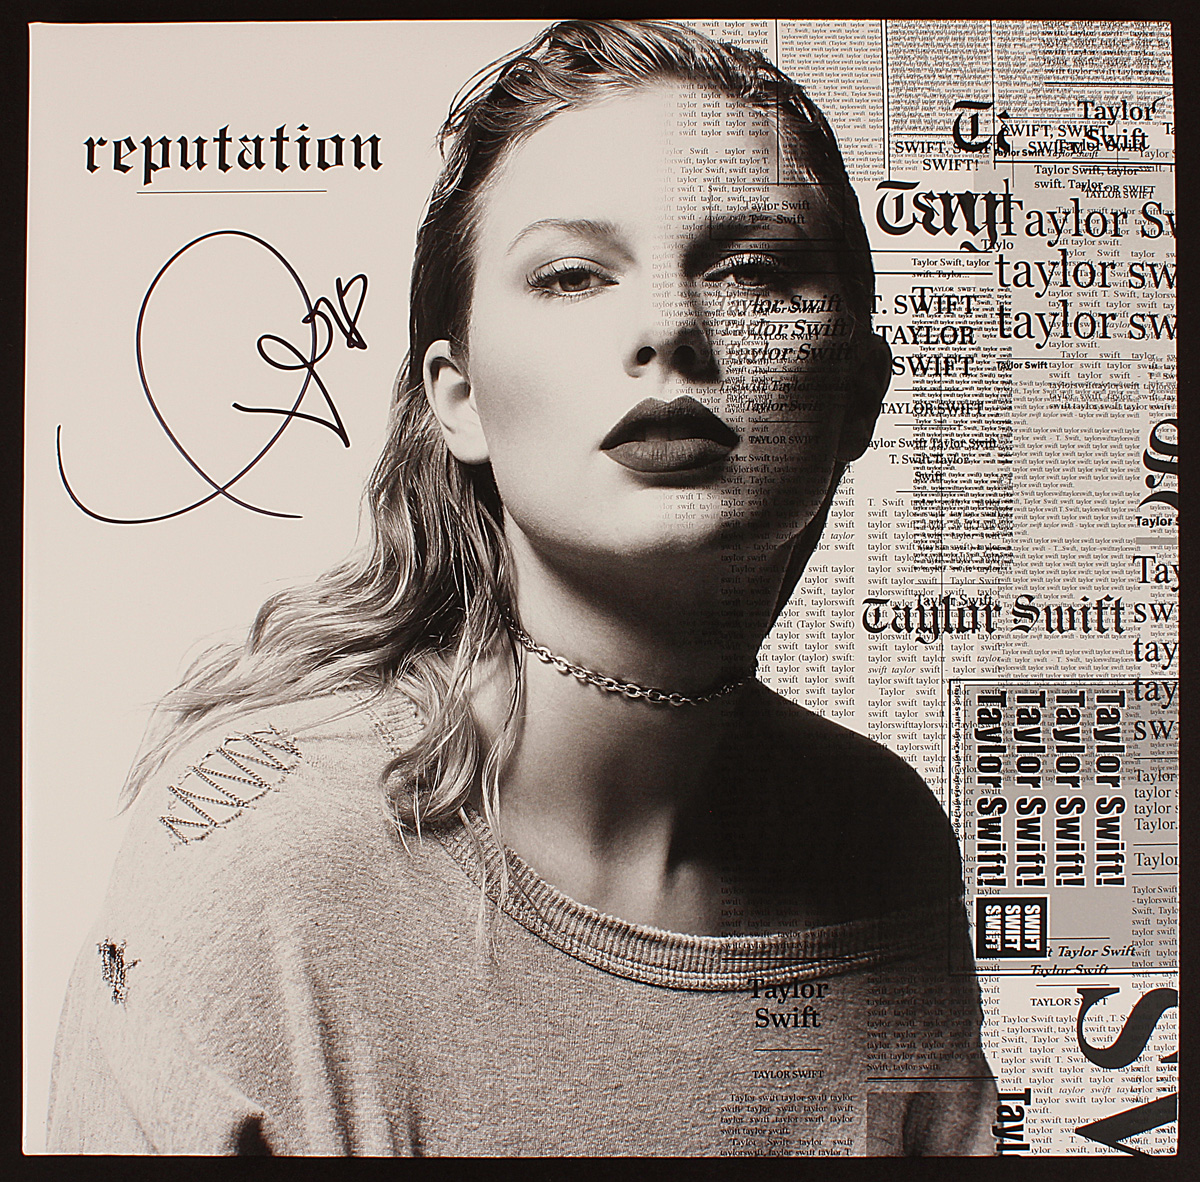 Taylor Swift Sends Signed Album